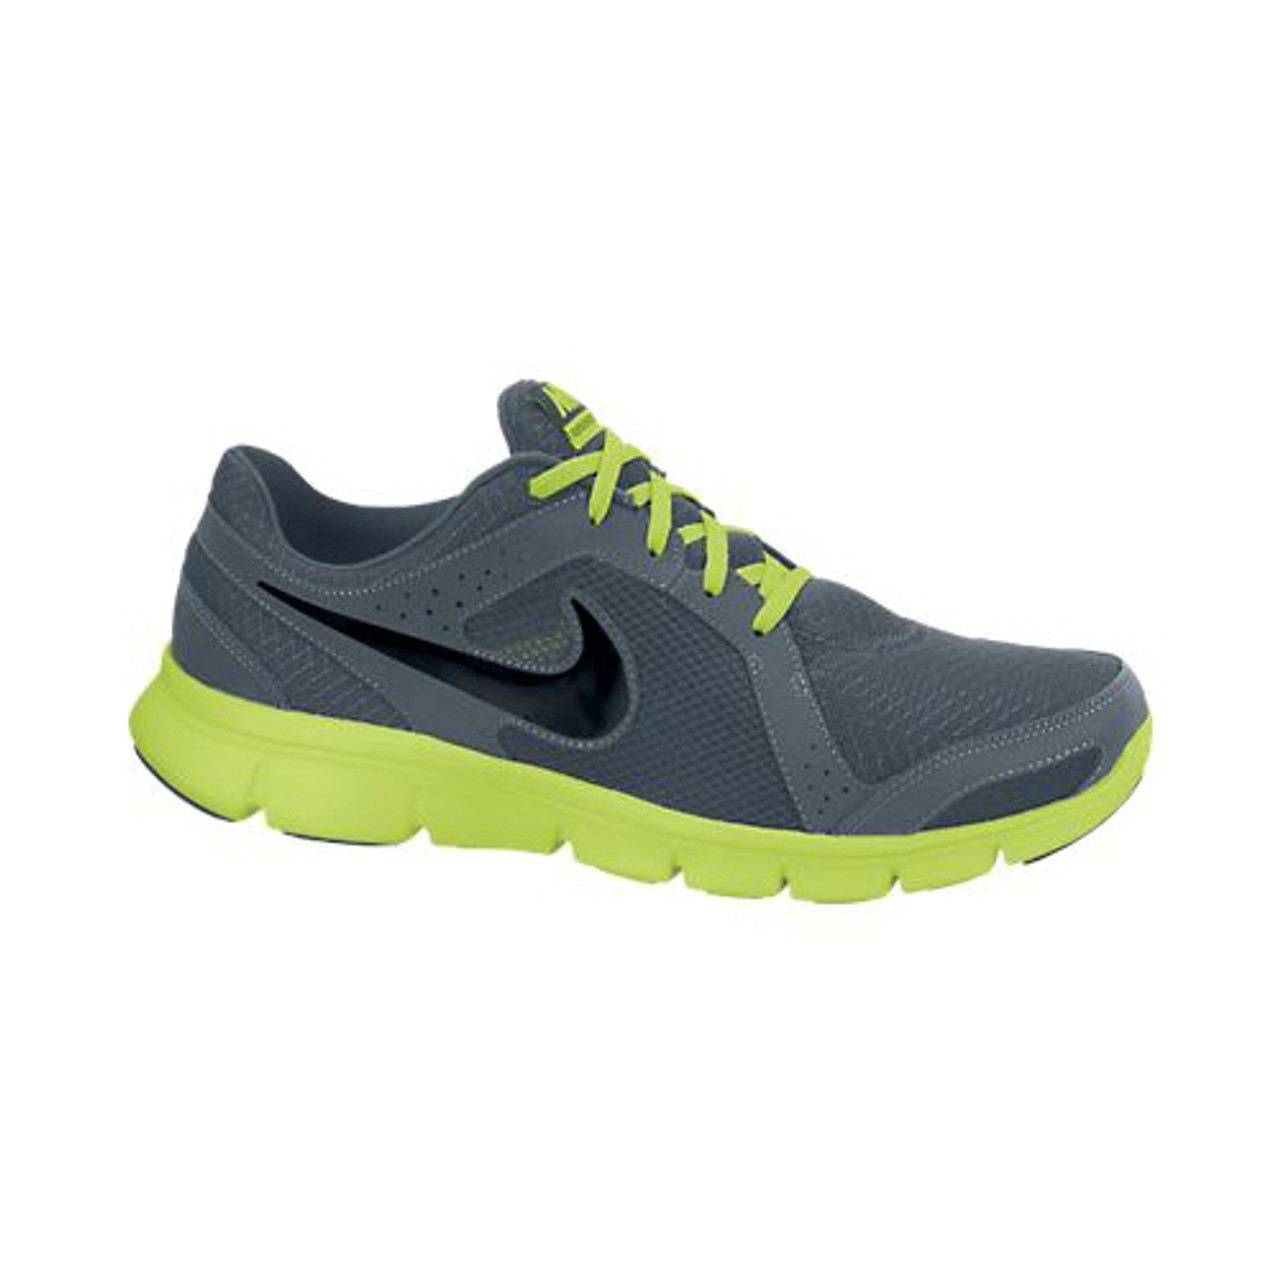 Nike Flex Experience Run 2 Mens Running Shoes - Armory Slate/Volt/Black | Discount Nike Men's Athletic & More - Shoolu.com | Shoolu.com